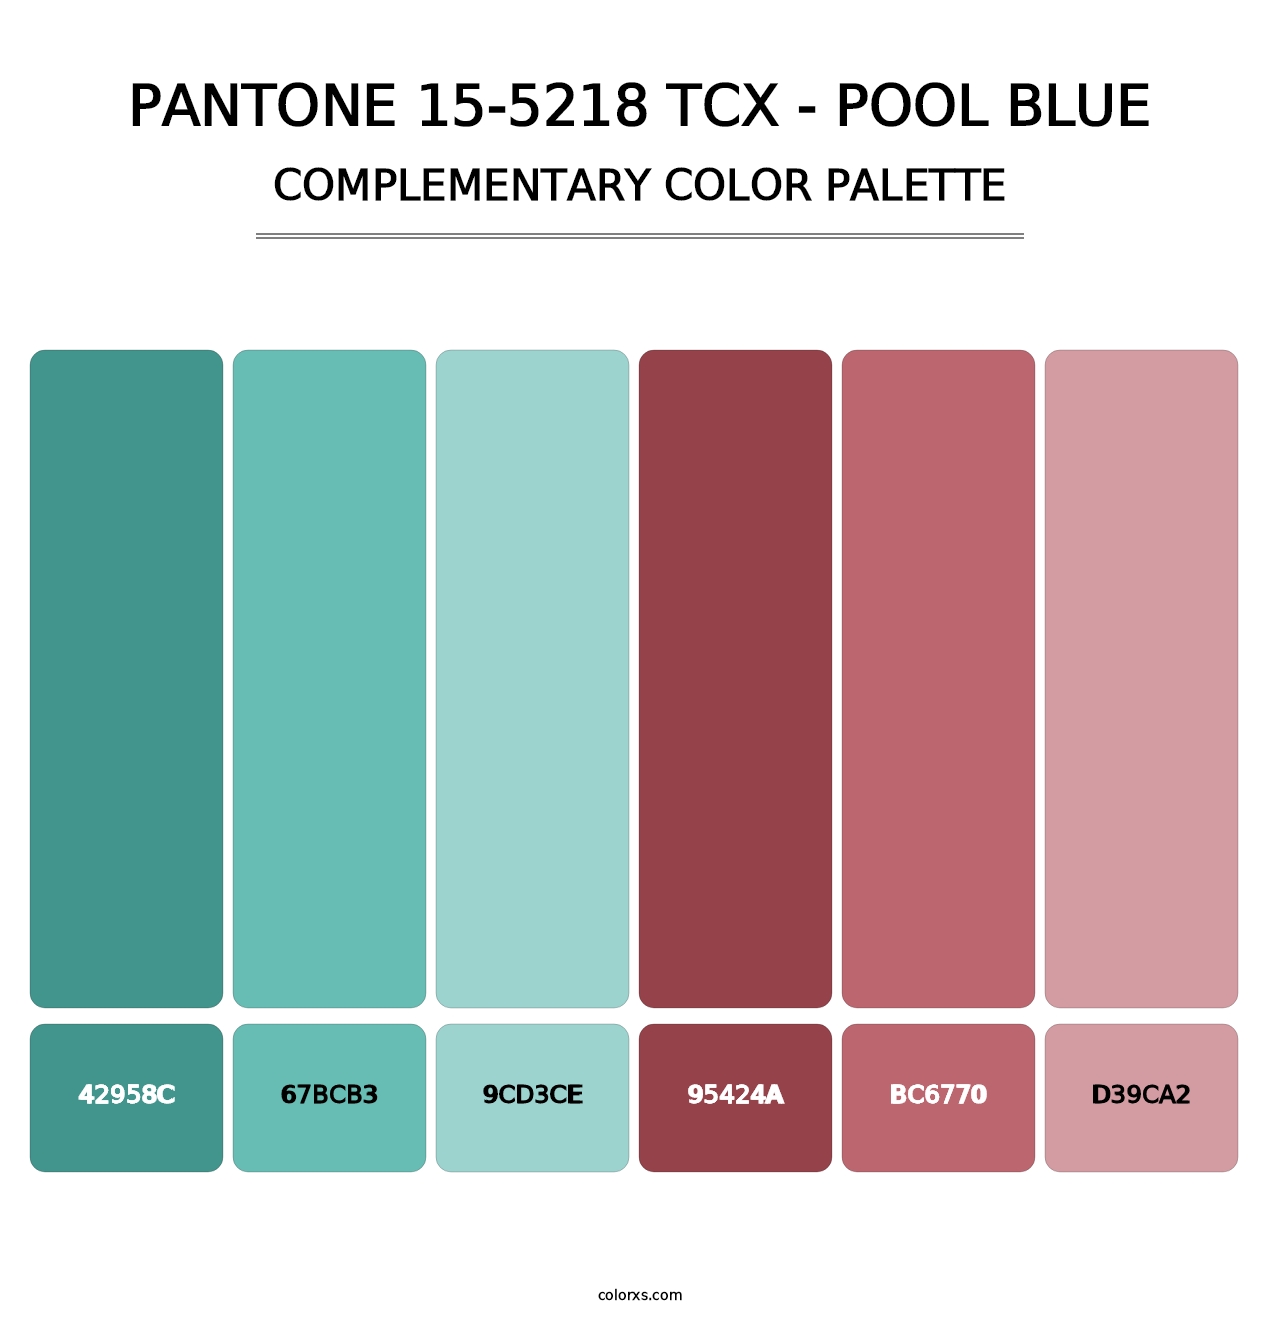 PANTONE 15-5218 TCX - Pool Blue - Complementary Color Palette